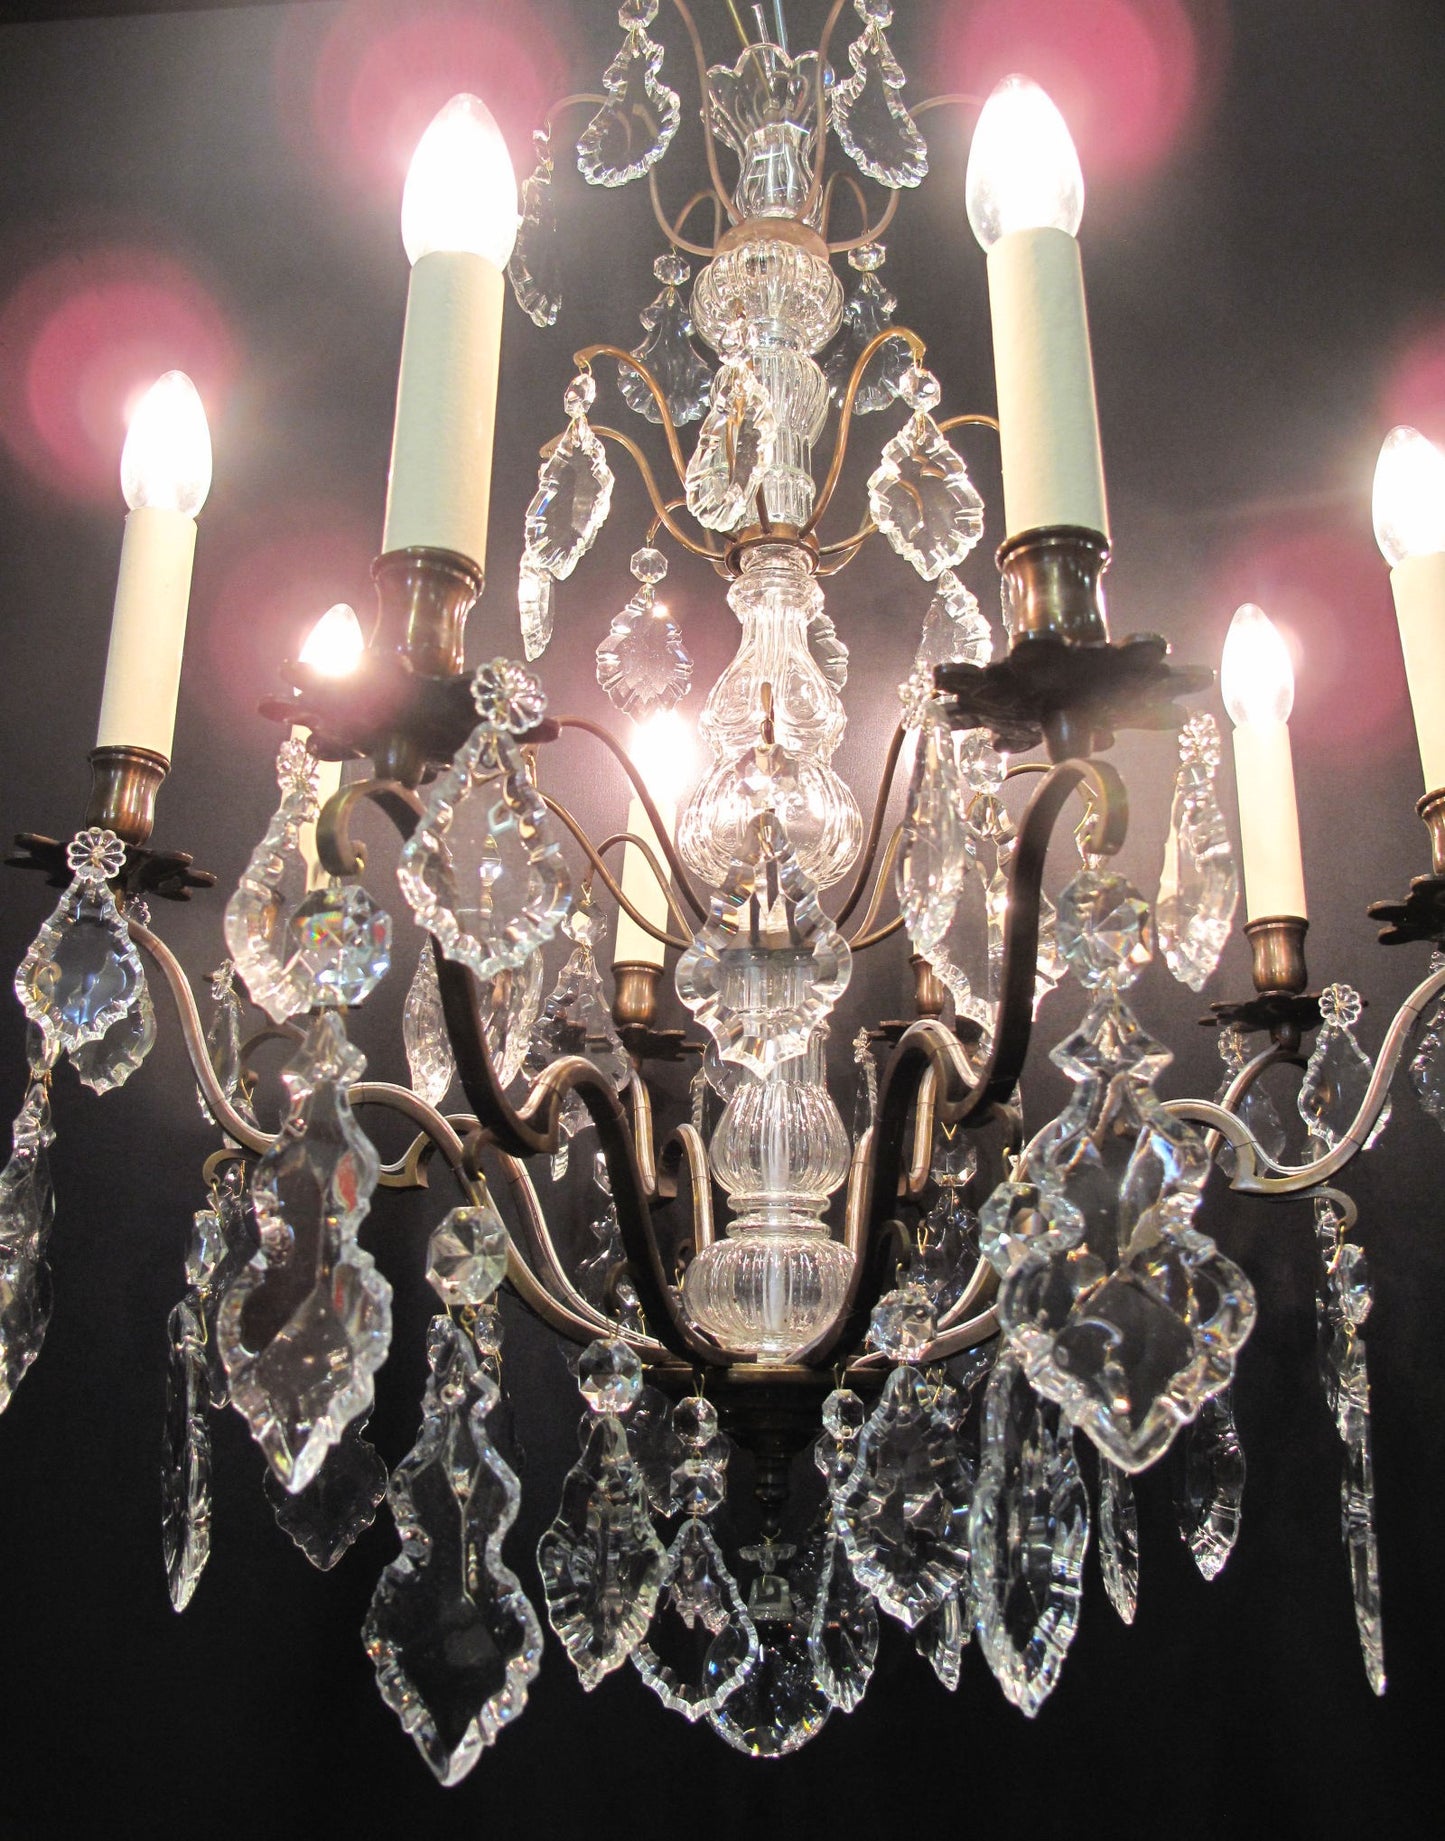 chandelier lit up from below